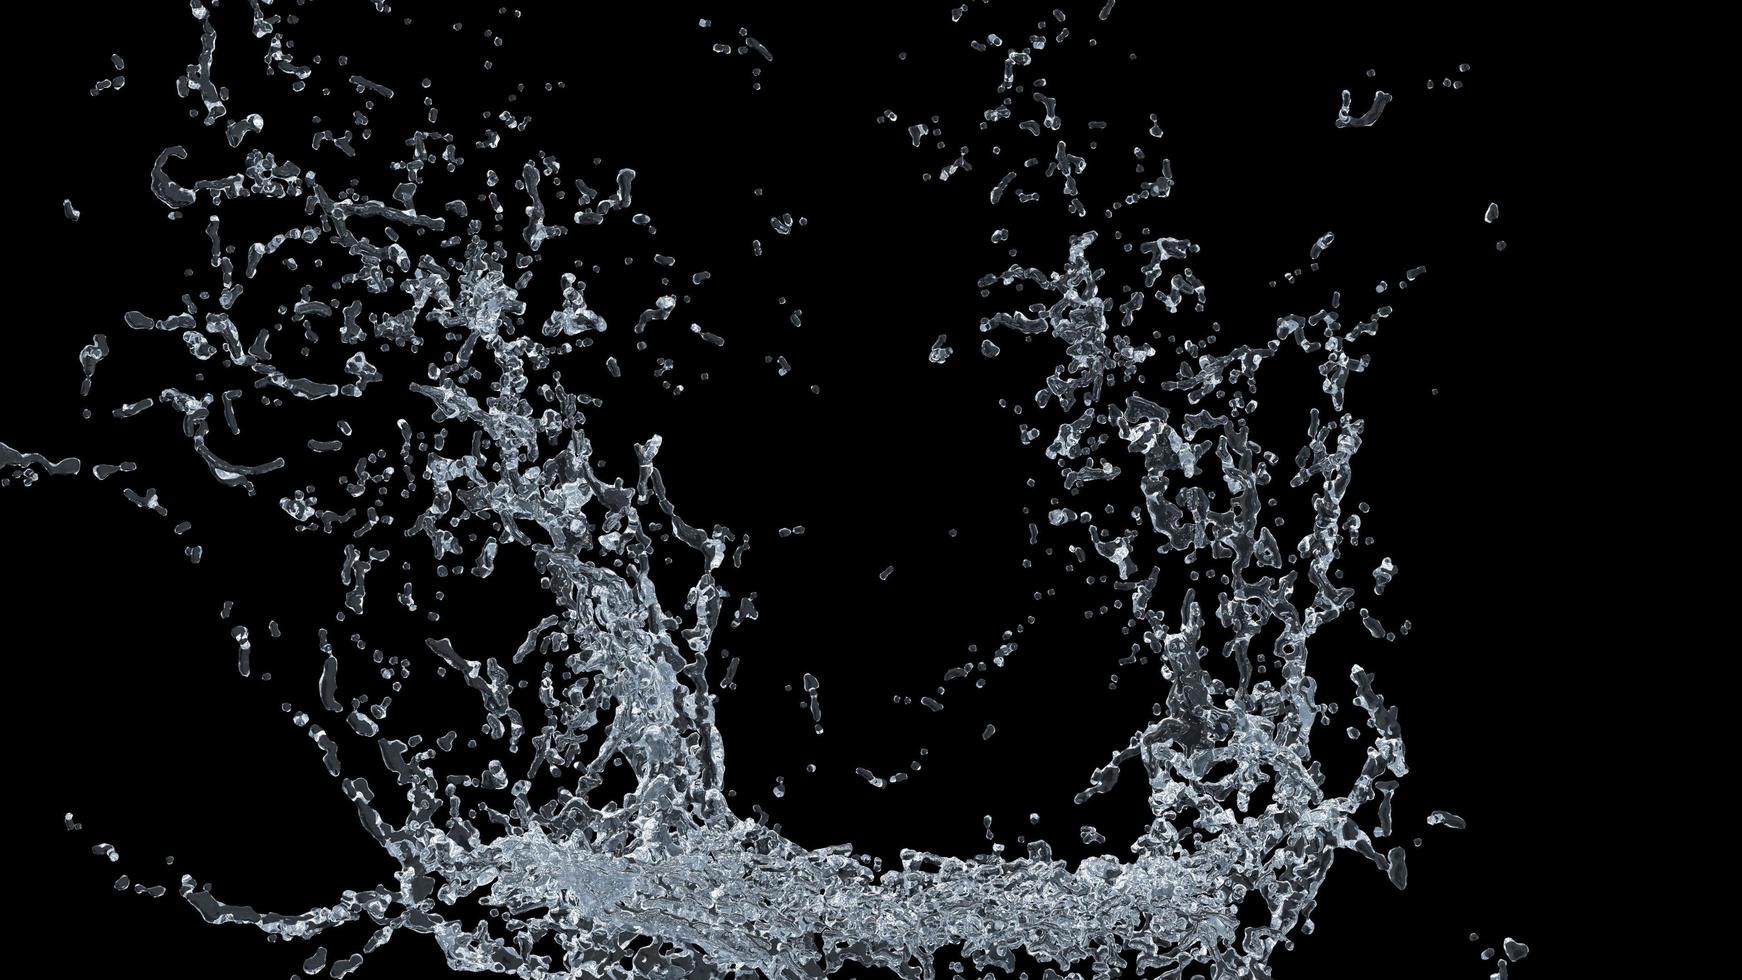 Water splashing on black background photo